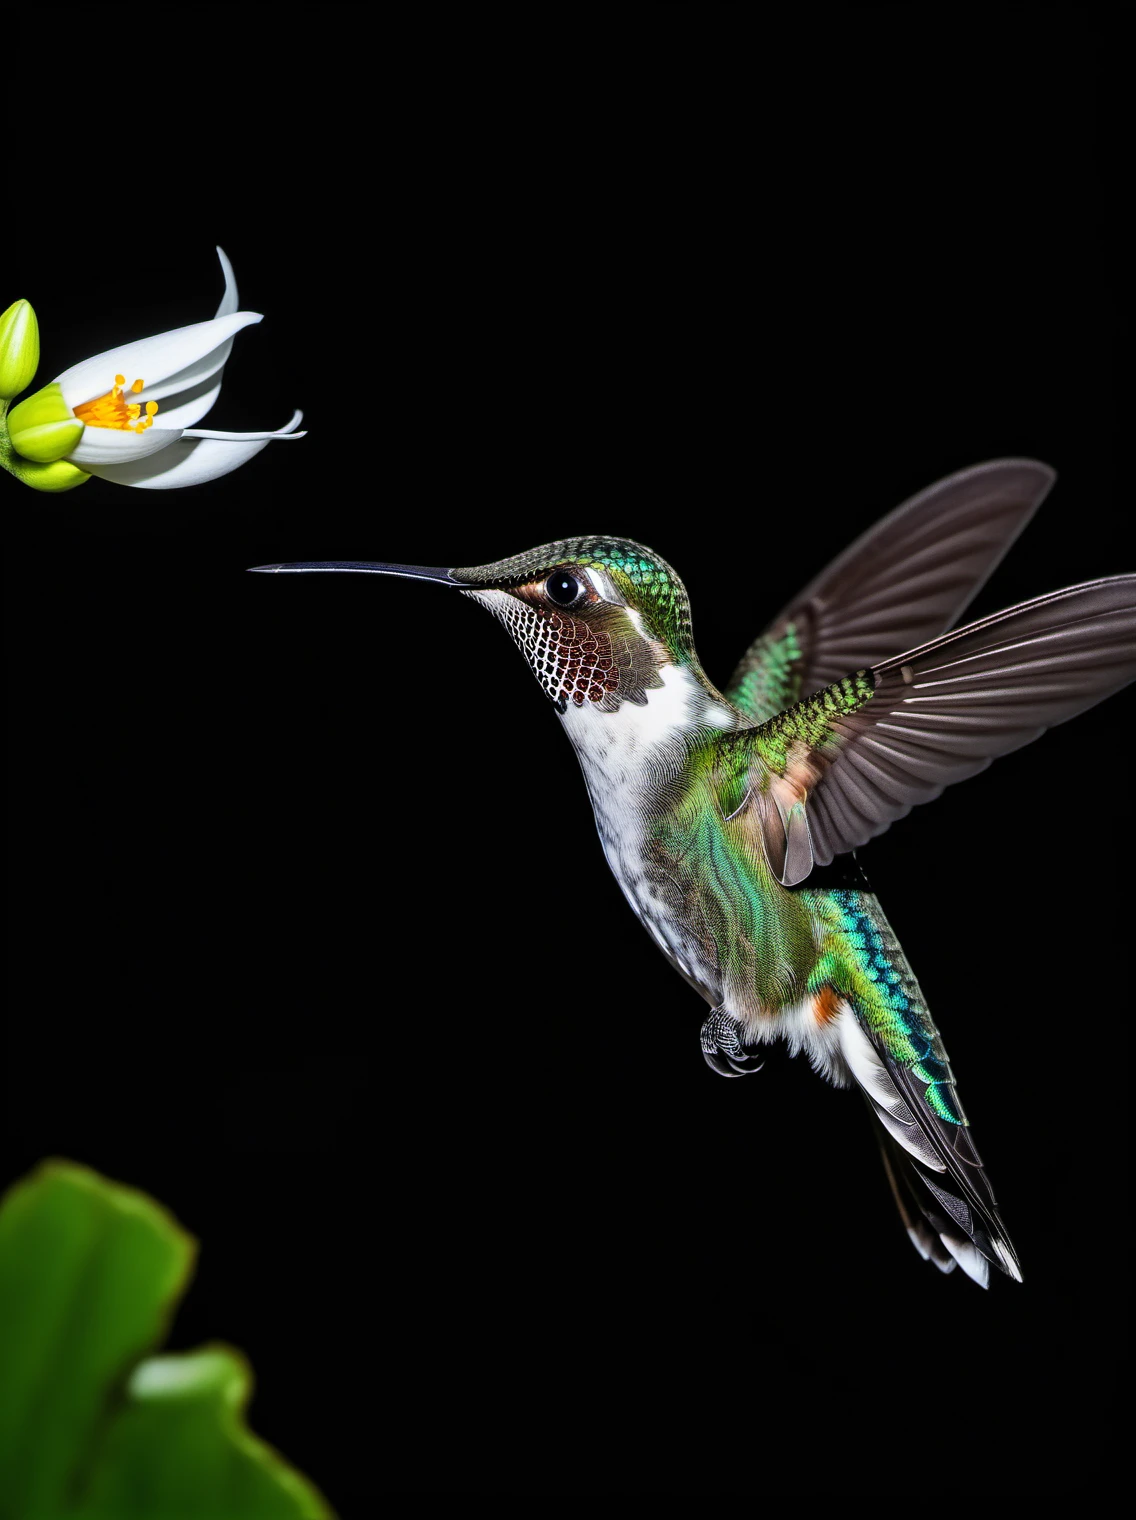 a single hummingbird sipping nectar from an white flower, ukiyo-e , detailed bird movement, fluid motion, lifelike